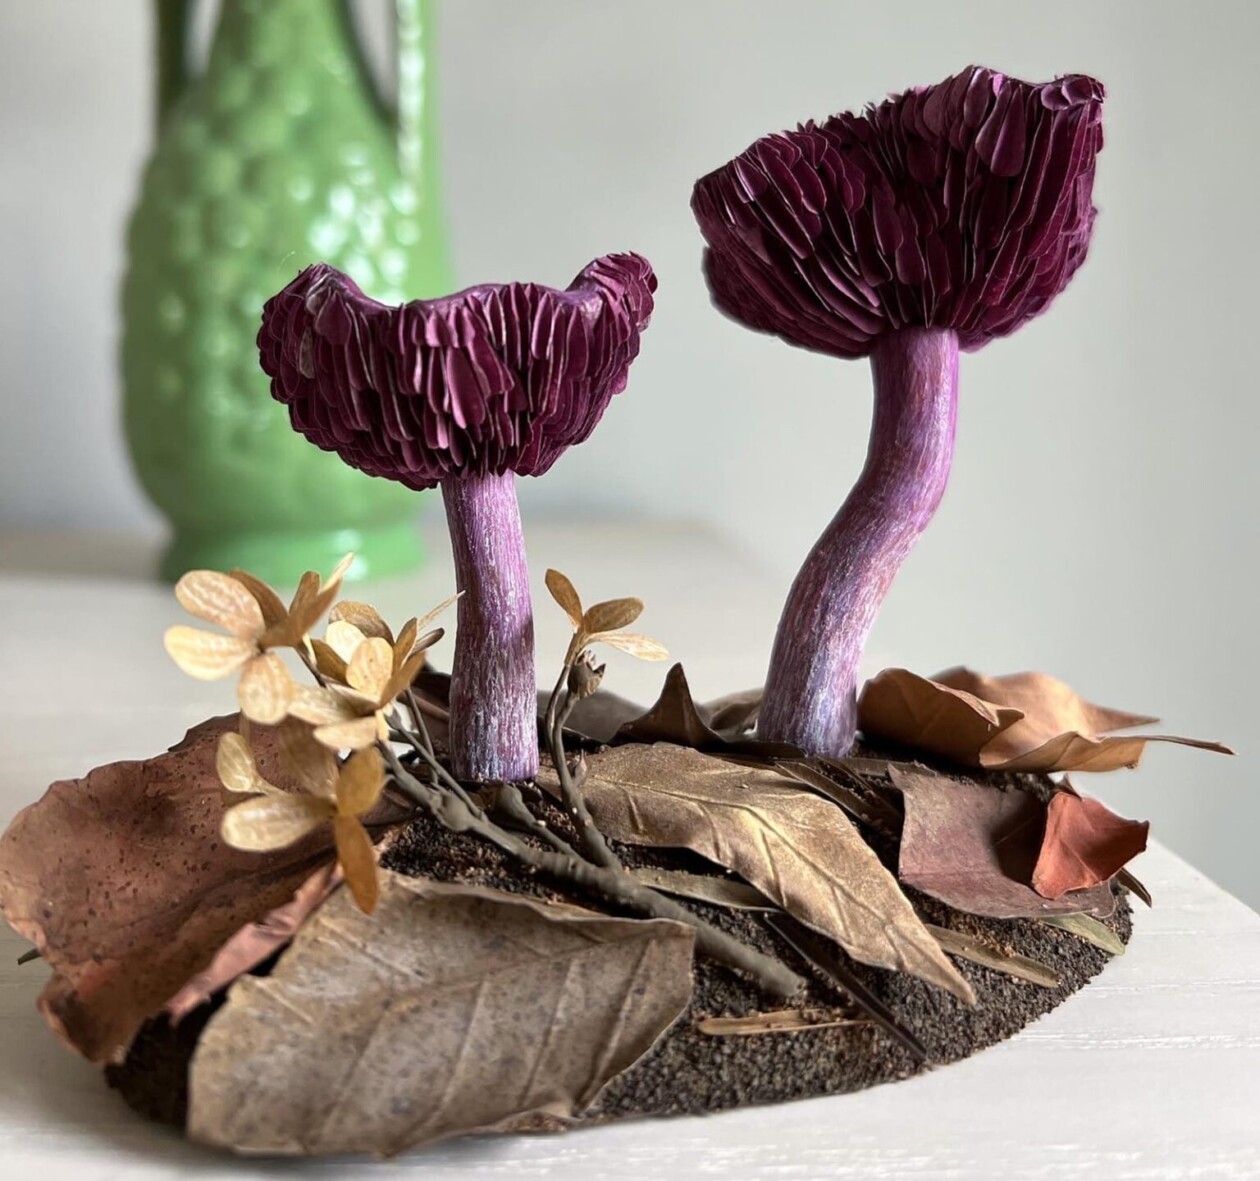 Splendid Lifelike Paper Sculptures Of Animals, Plants, Vegetables, And Mushrooms By ann Wood (3)